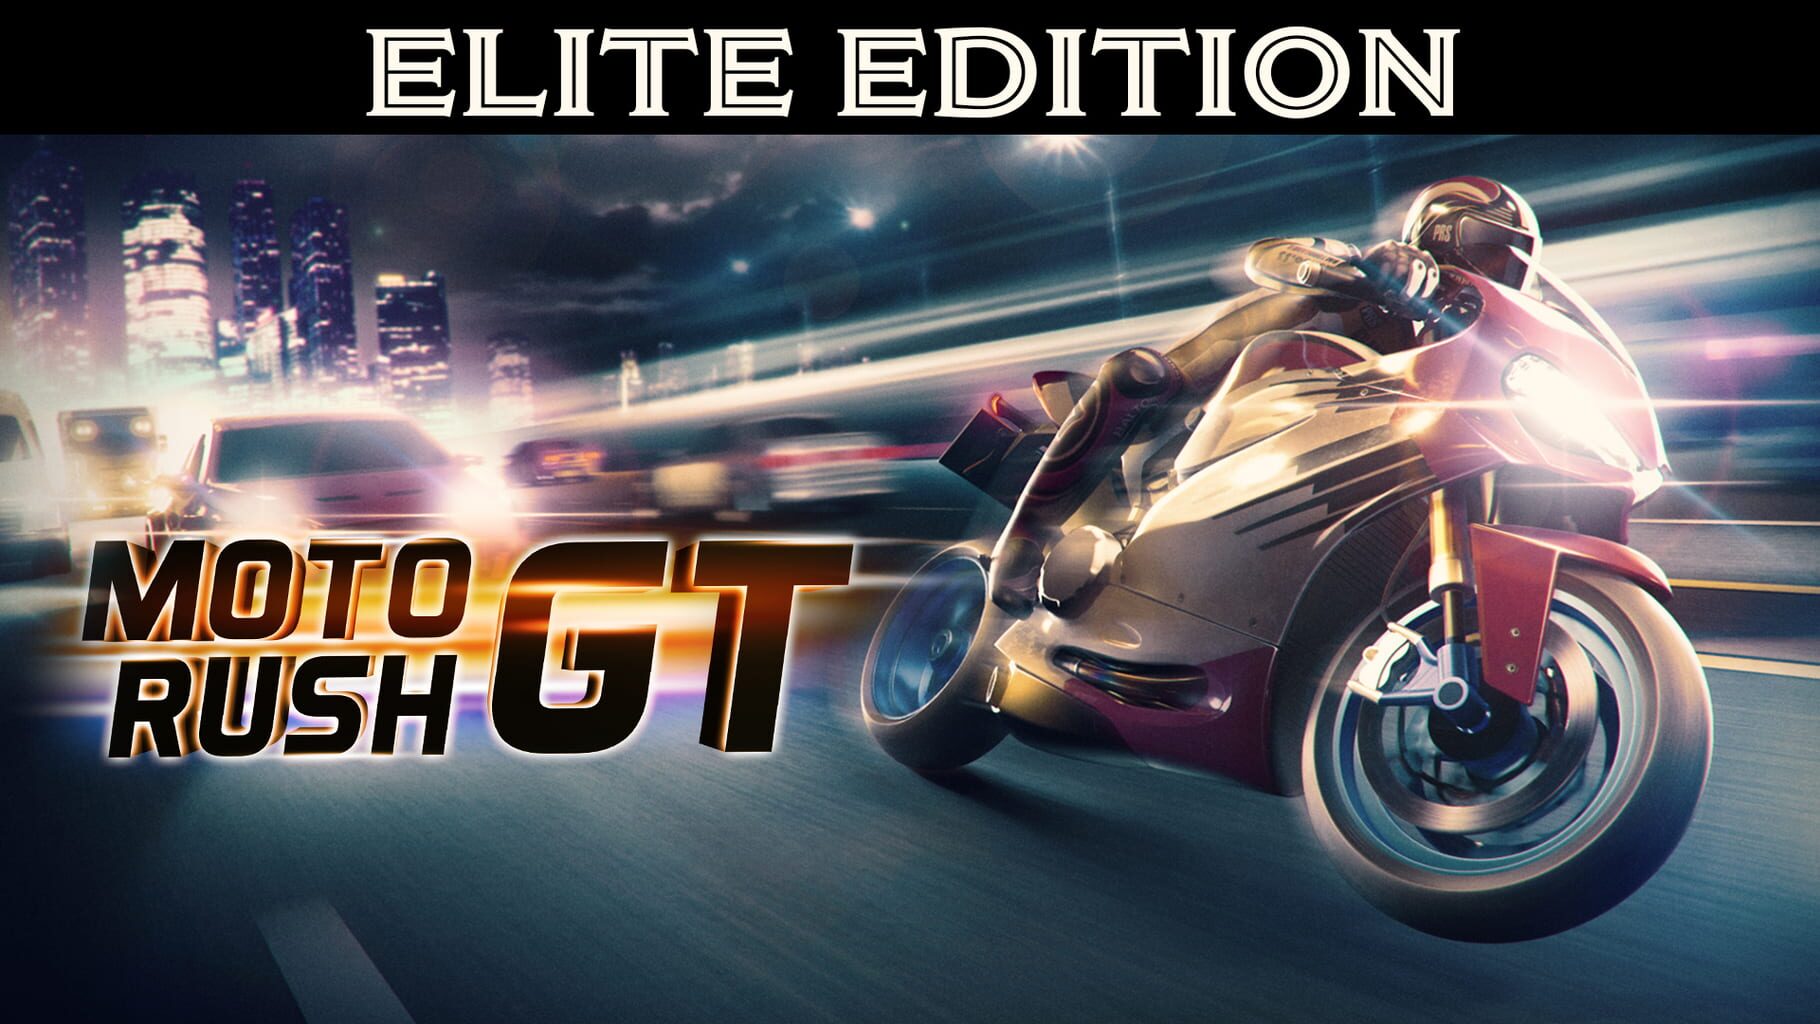 Moto Rush GT: Elite Edition artwork